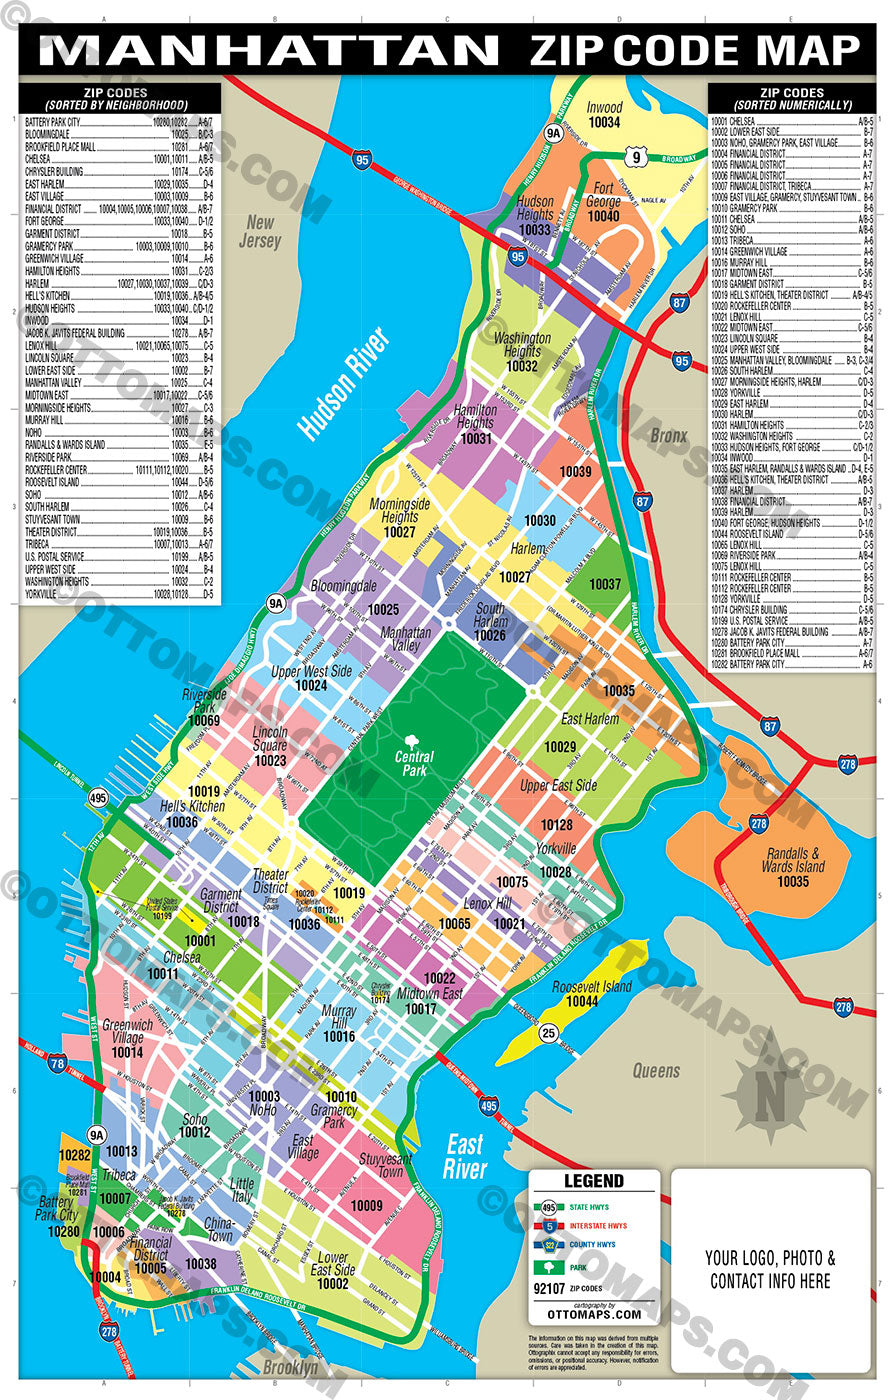 Manhattan Zip Code Map (Zip Codes colorized) – Otto Maps